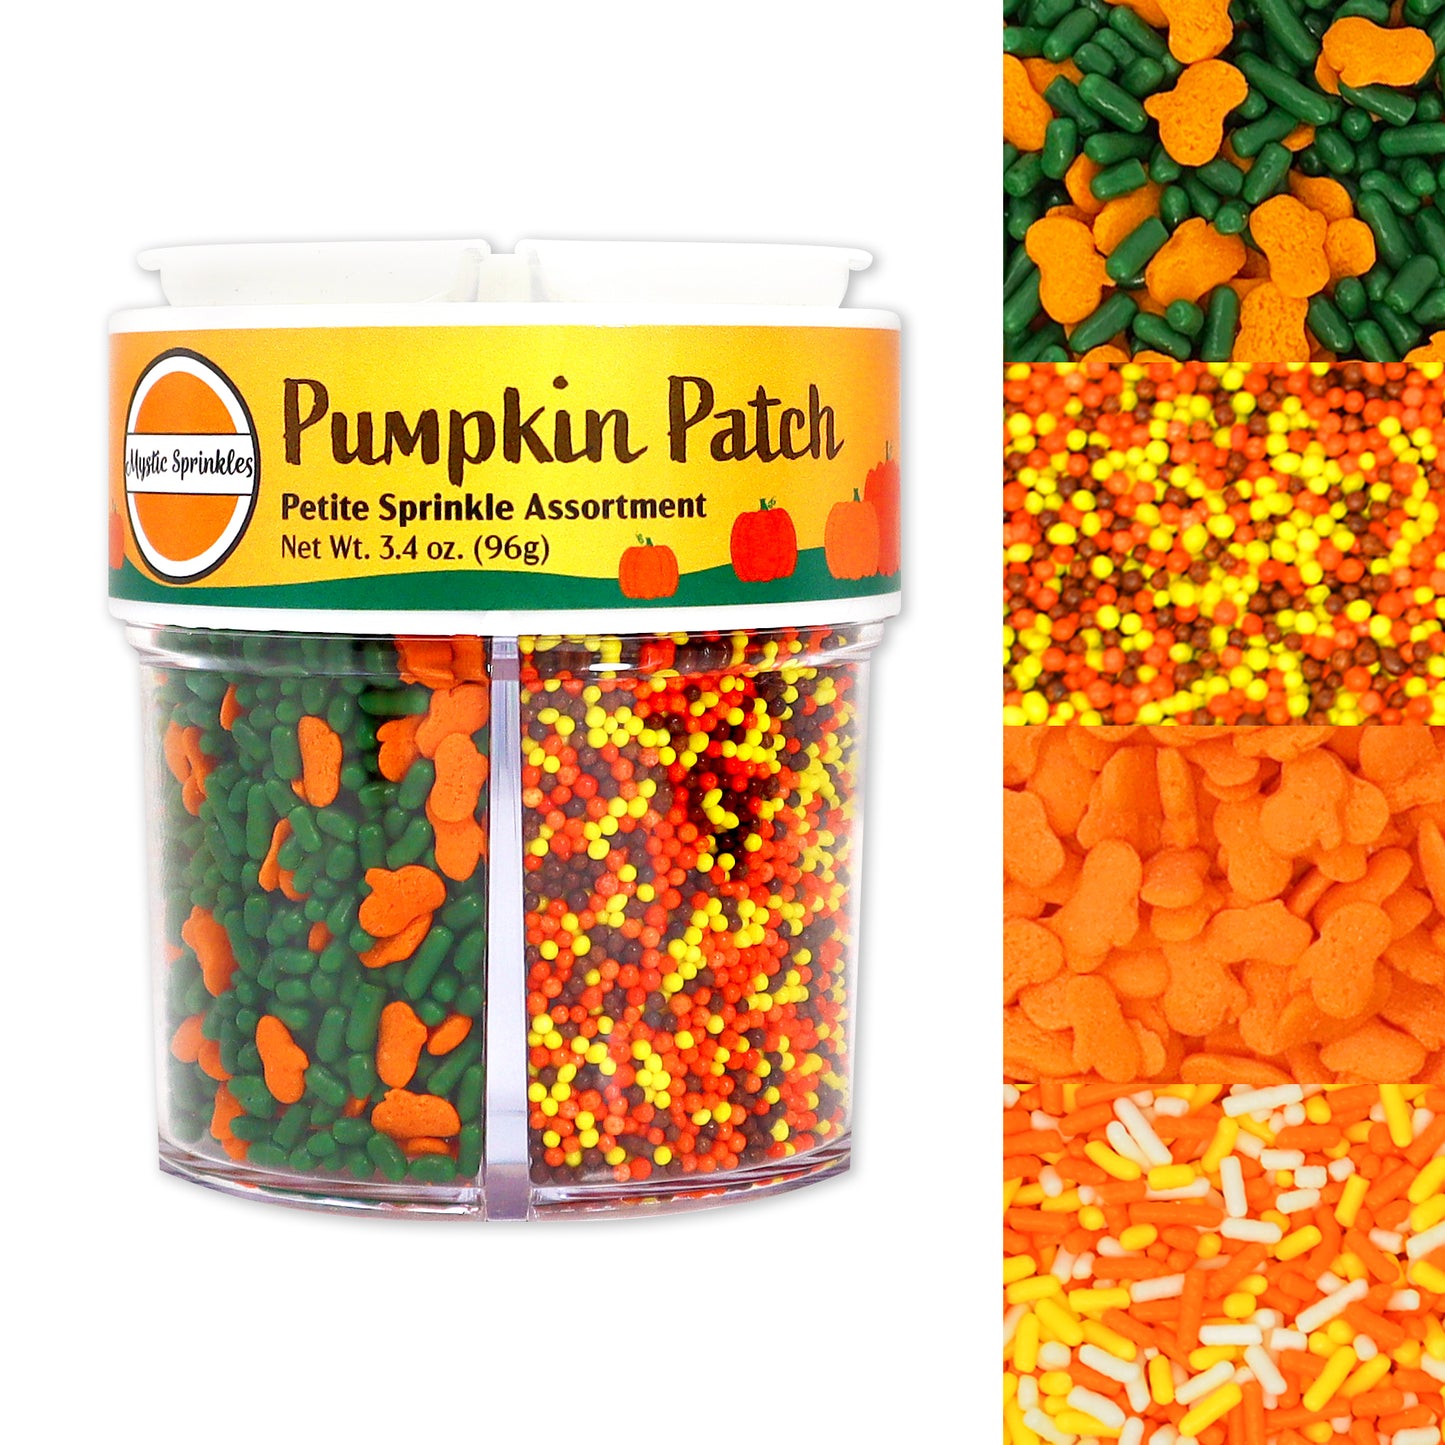 Pumpkin Patch Petite Sprinkle Assortment 3.4oz